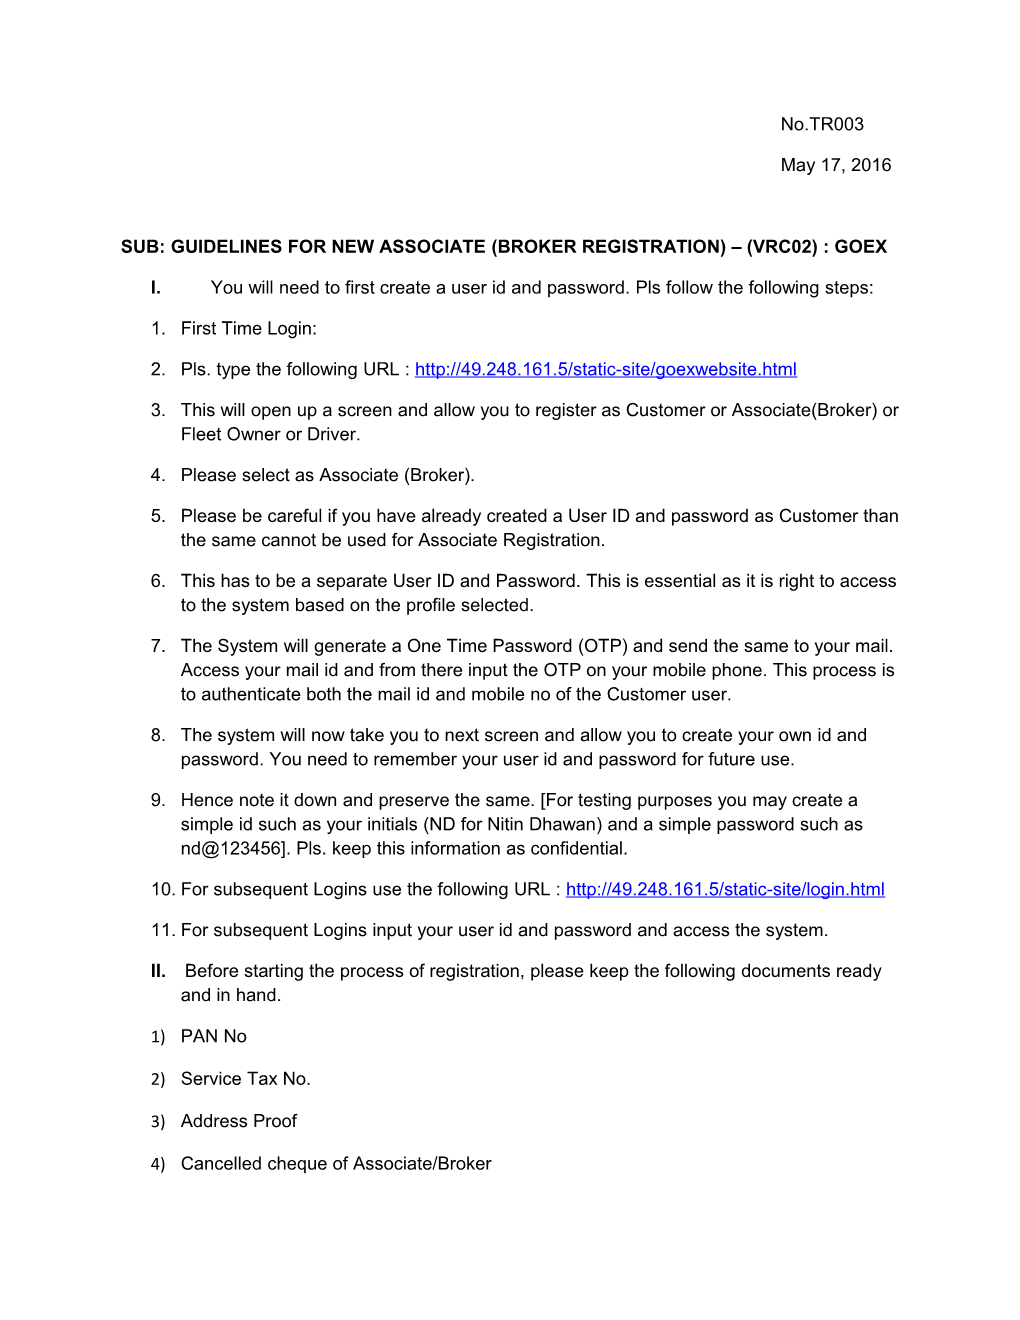 Sub: Guidelines for New Associate (Broker Registration) (Vrc02) : Goex